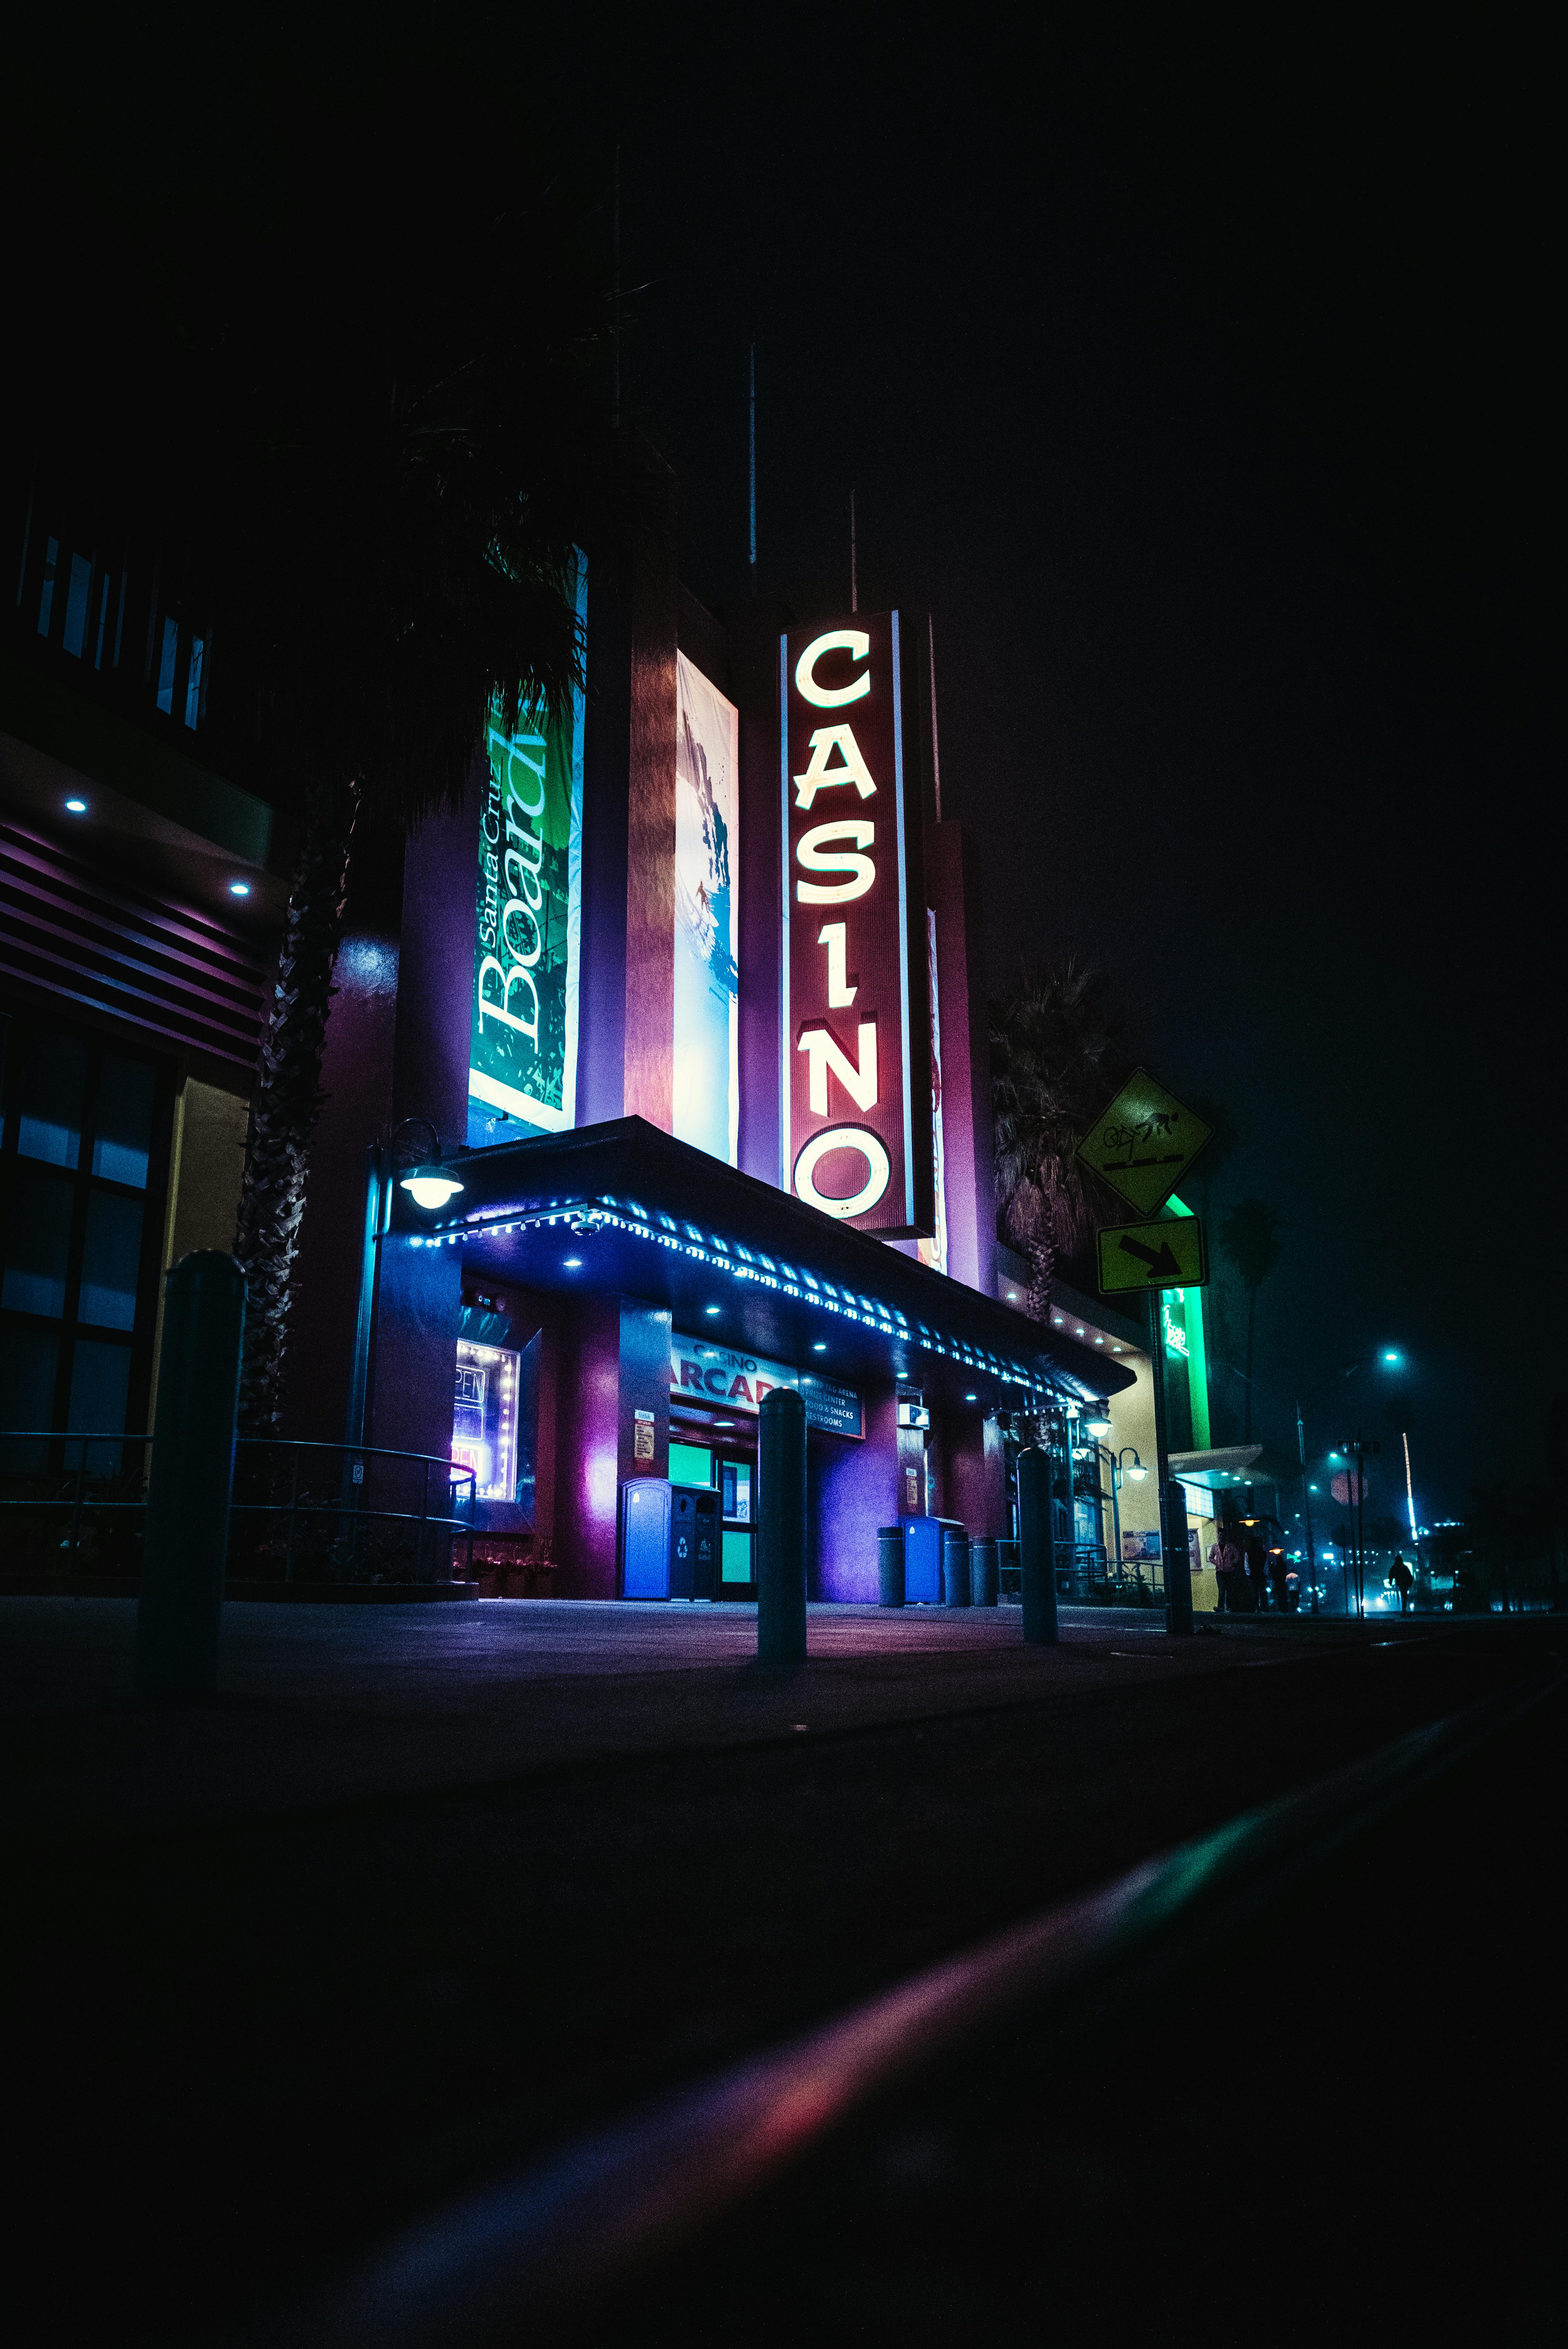 Casino building with neon signboards in dark night \u00b7 Free Stock Photo